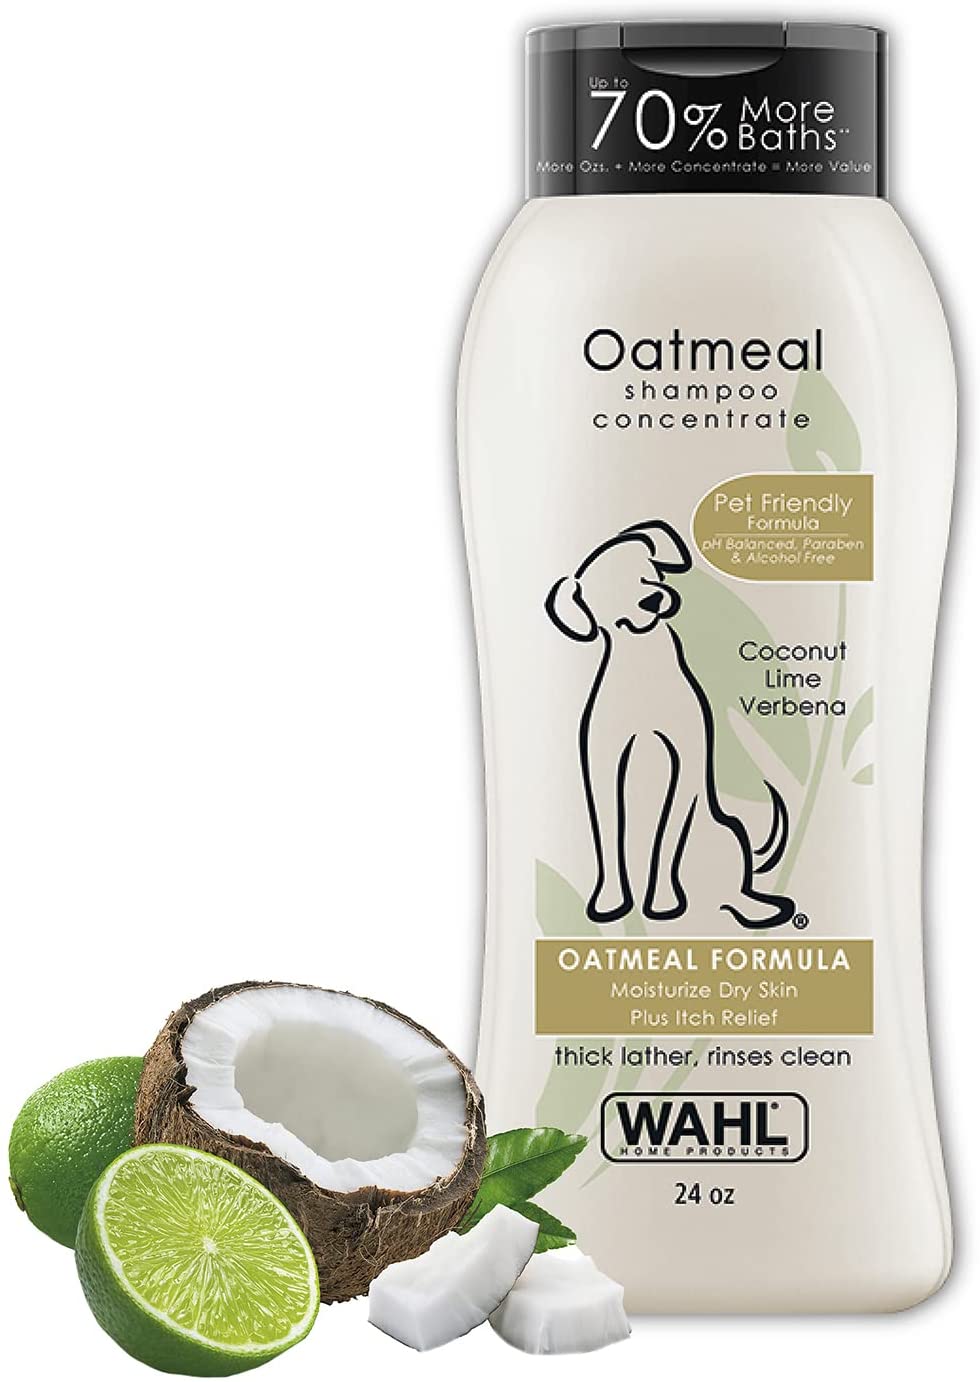 best shampoo for short hair Chihuahua